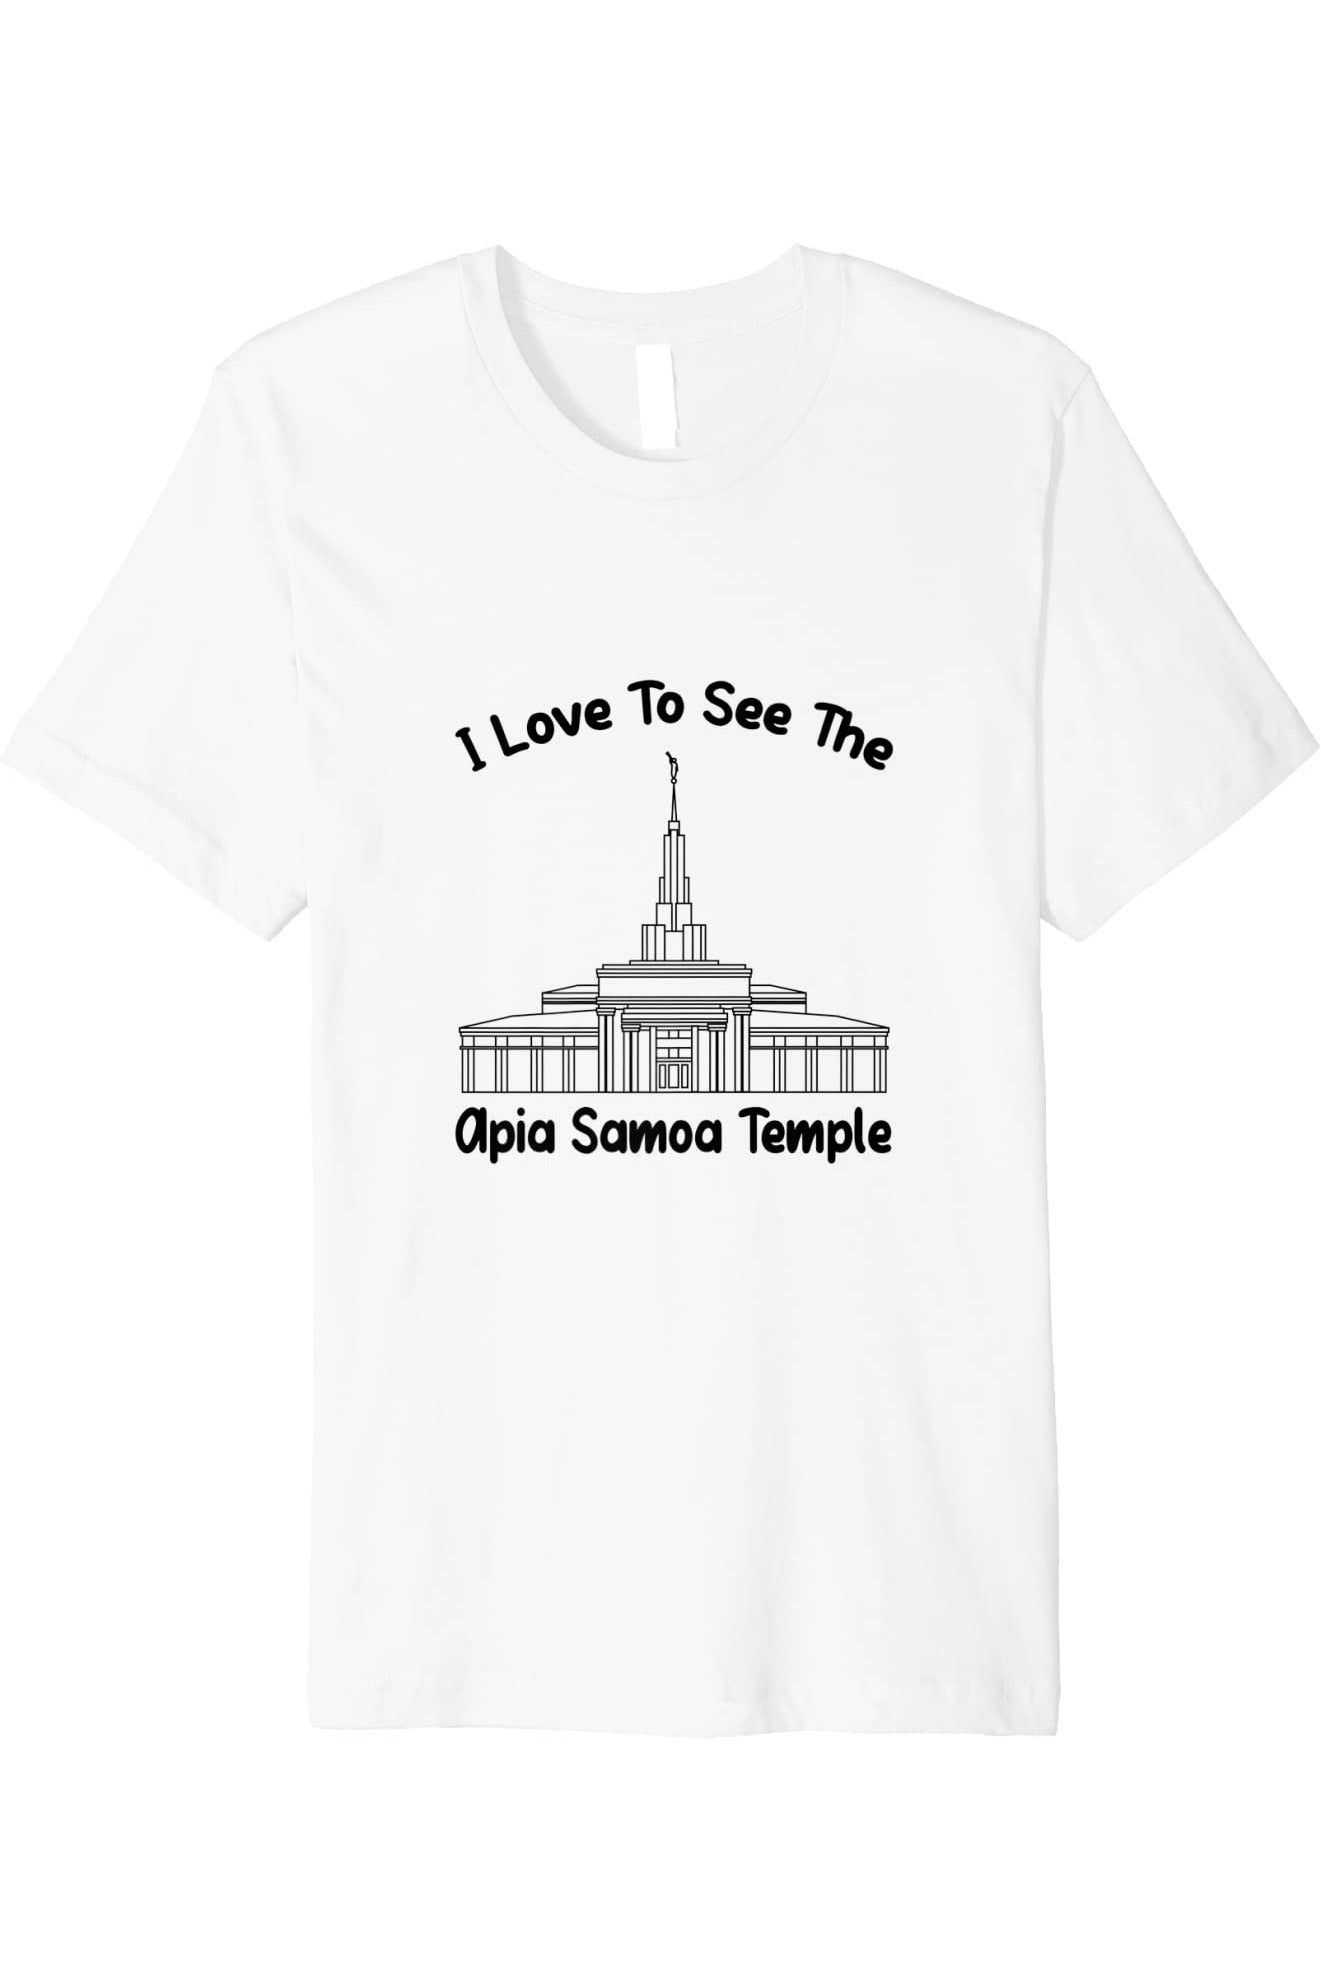 Apia Samoa Temple T-Shirt - Premium - Primary Style (English) US